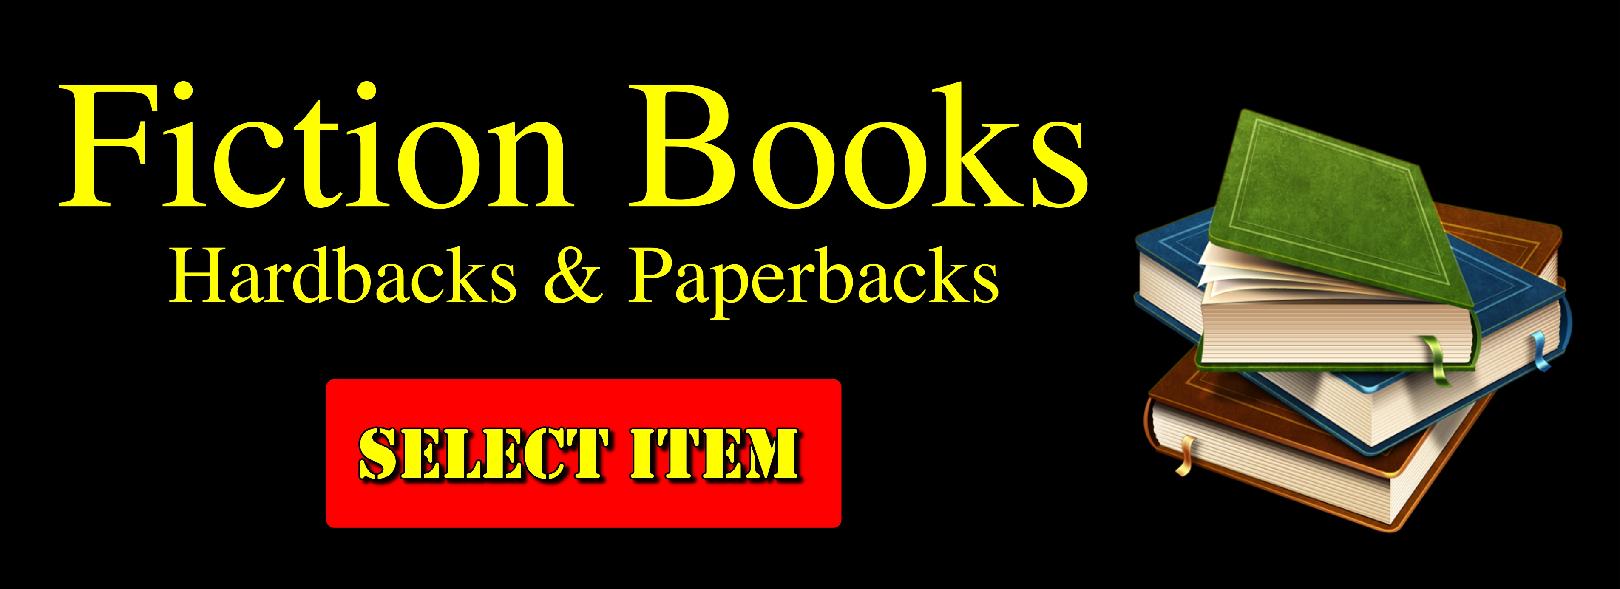 https://www.ebay.co.uk/str/brikabraxltd/Fiction-Books/_i.html?store_cat=3971556017